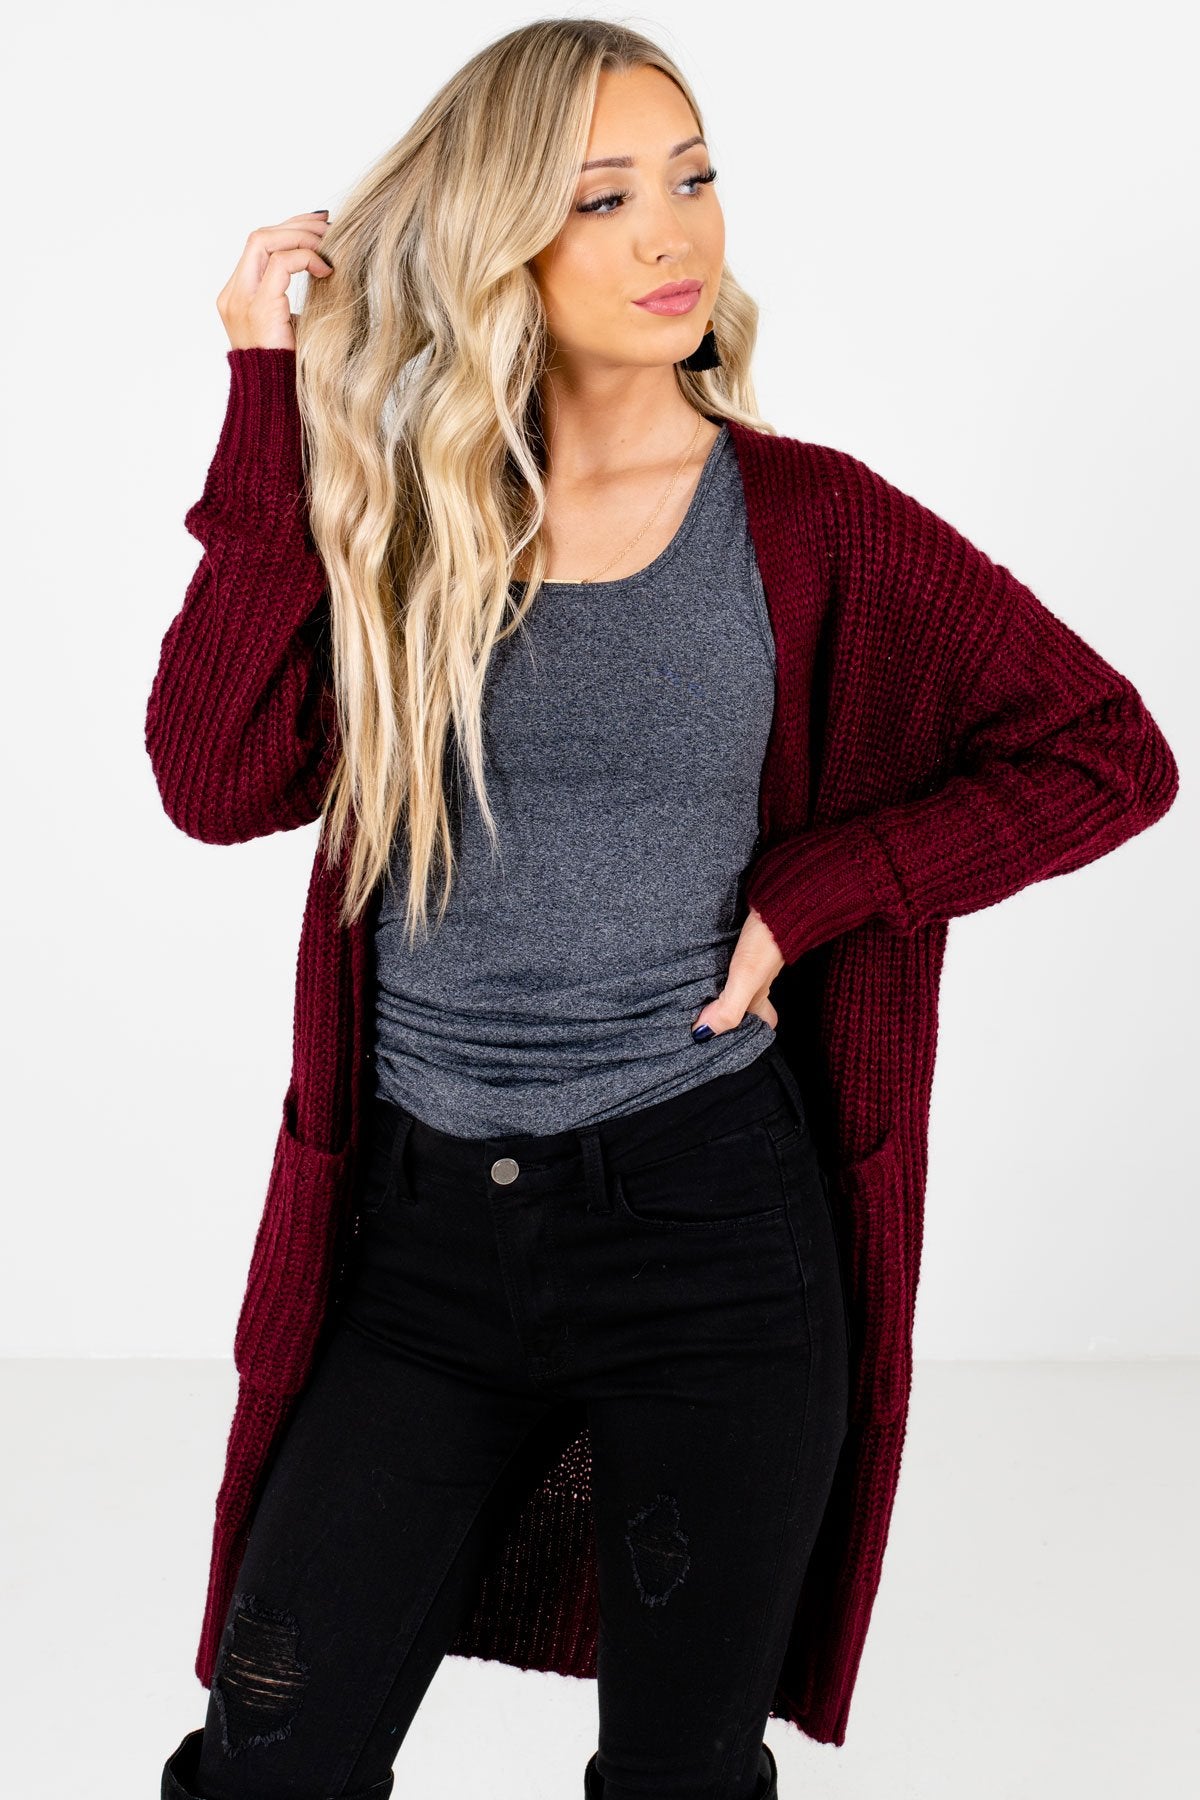 maroon sweater